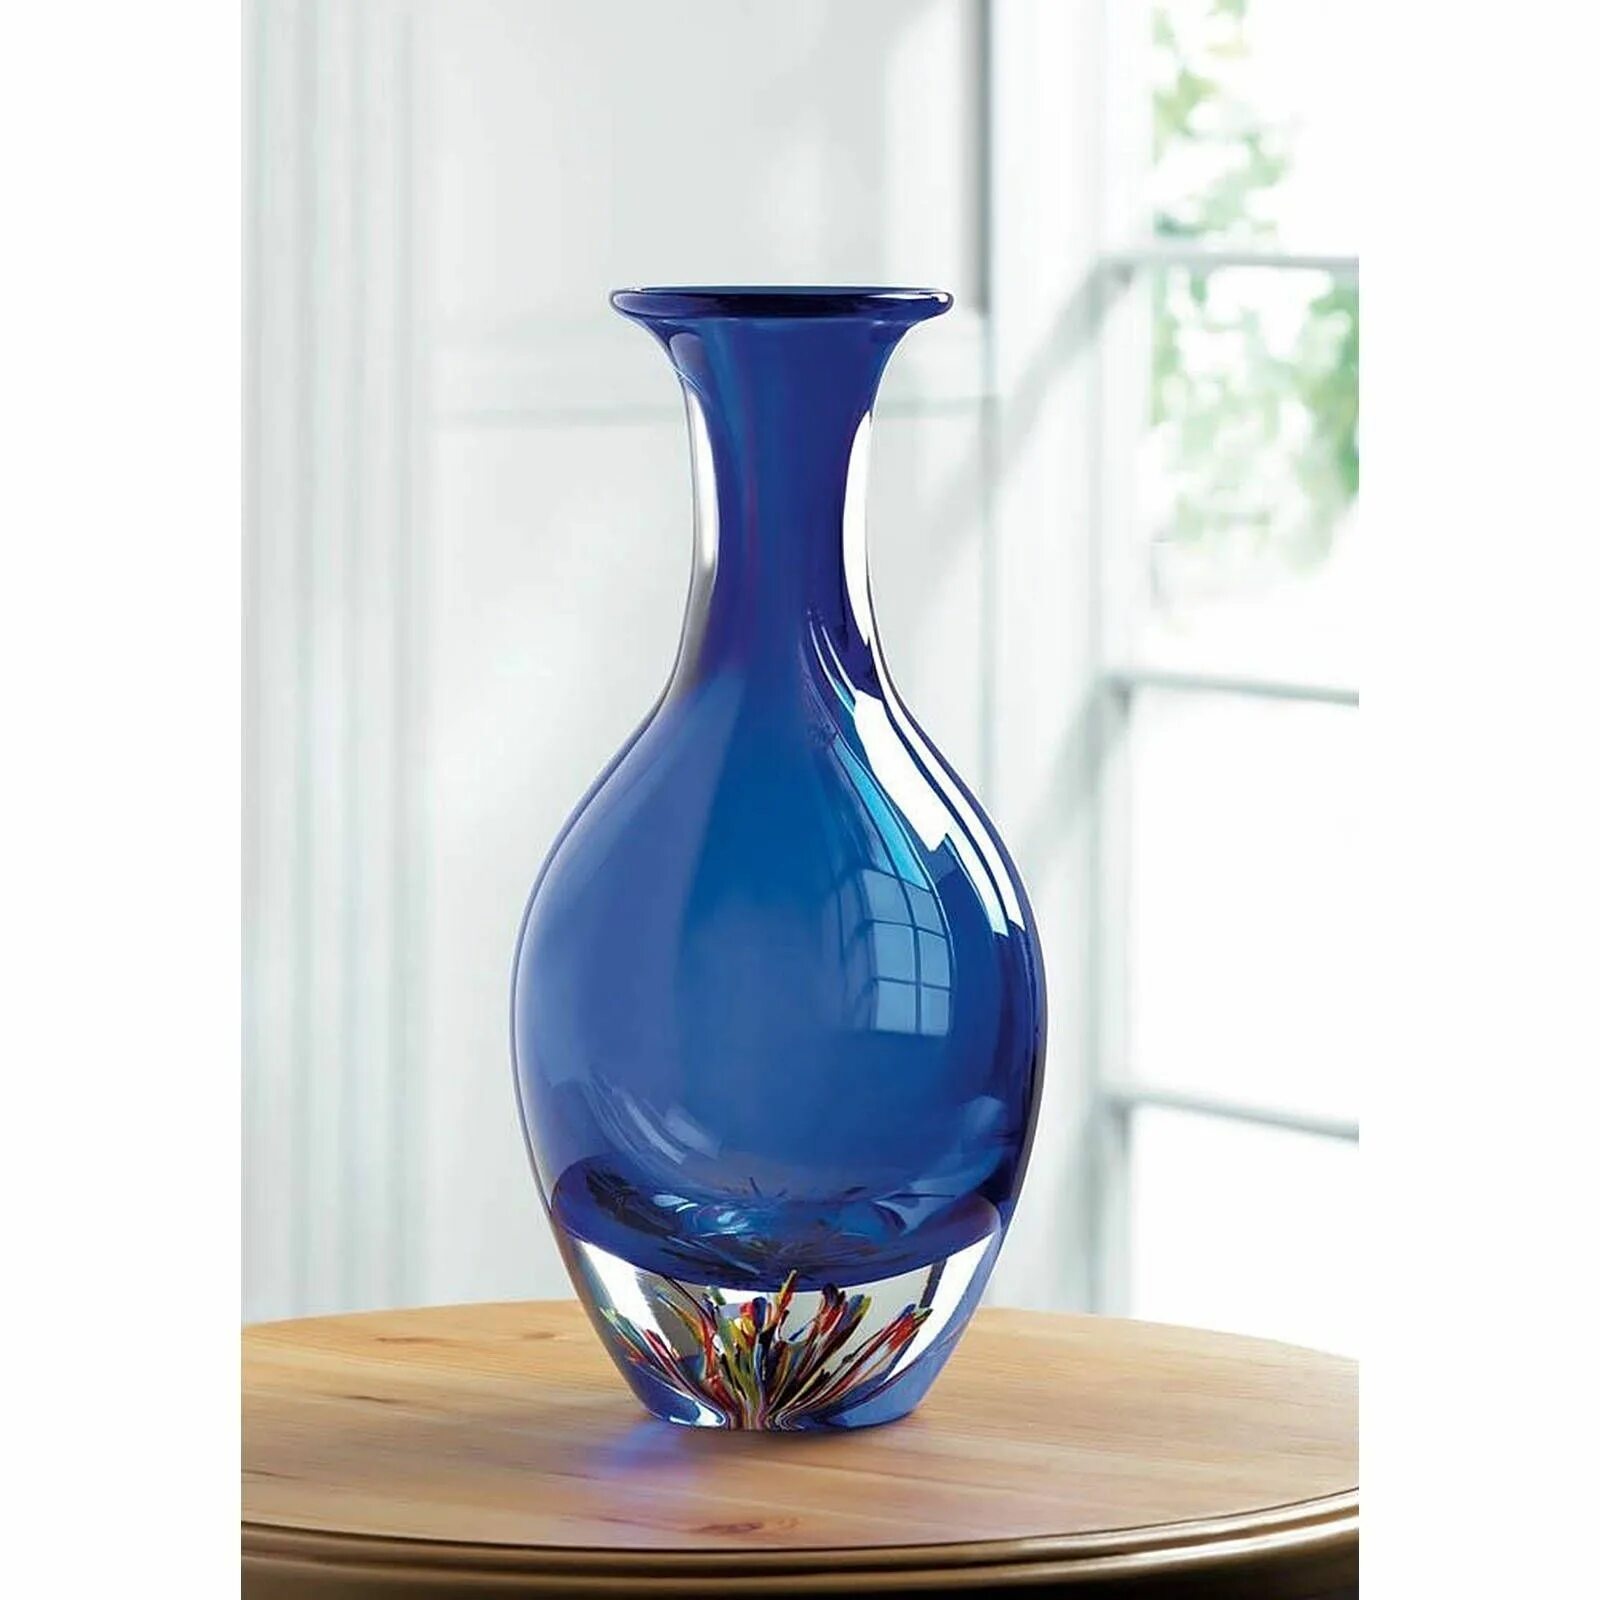 Цветной ваза. Glass Vase ваза. Ваза PARTGLASS 17102/0150/AA-0001 стекло. Ваза синяя. Стеклянная вазочка.